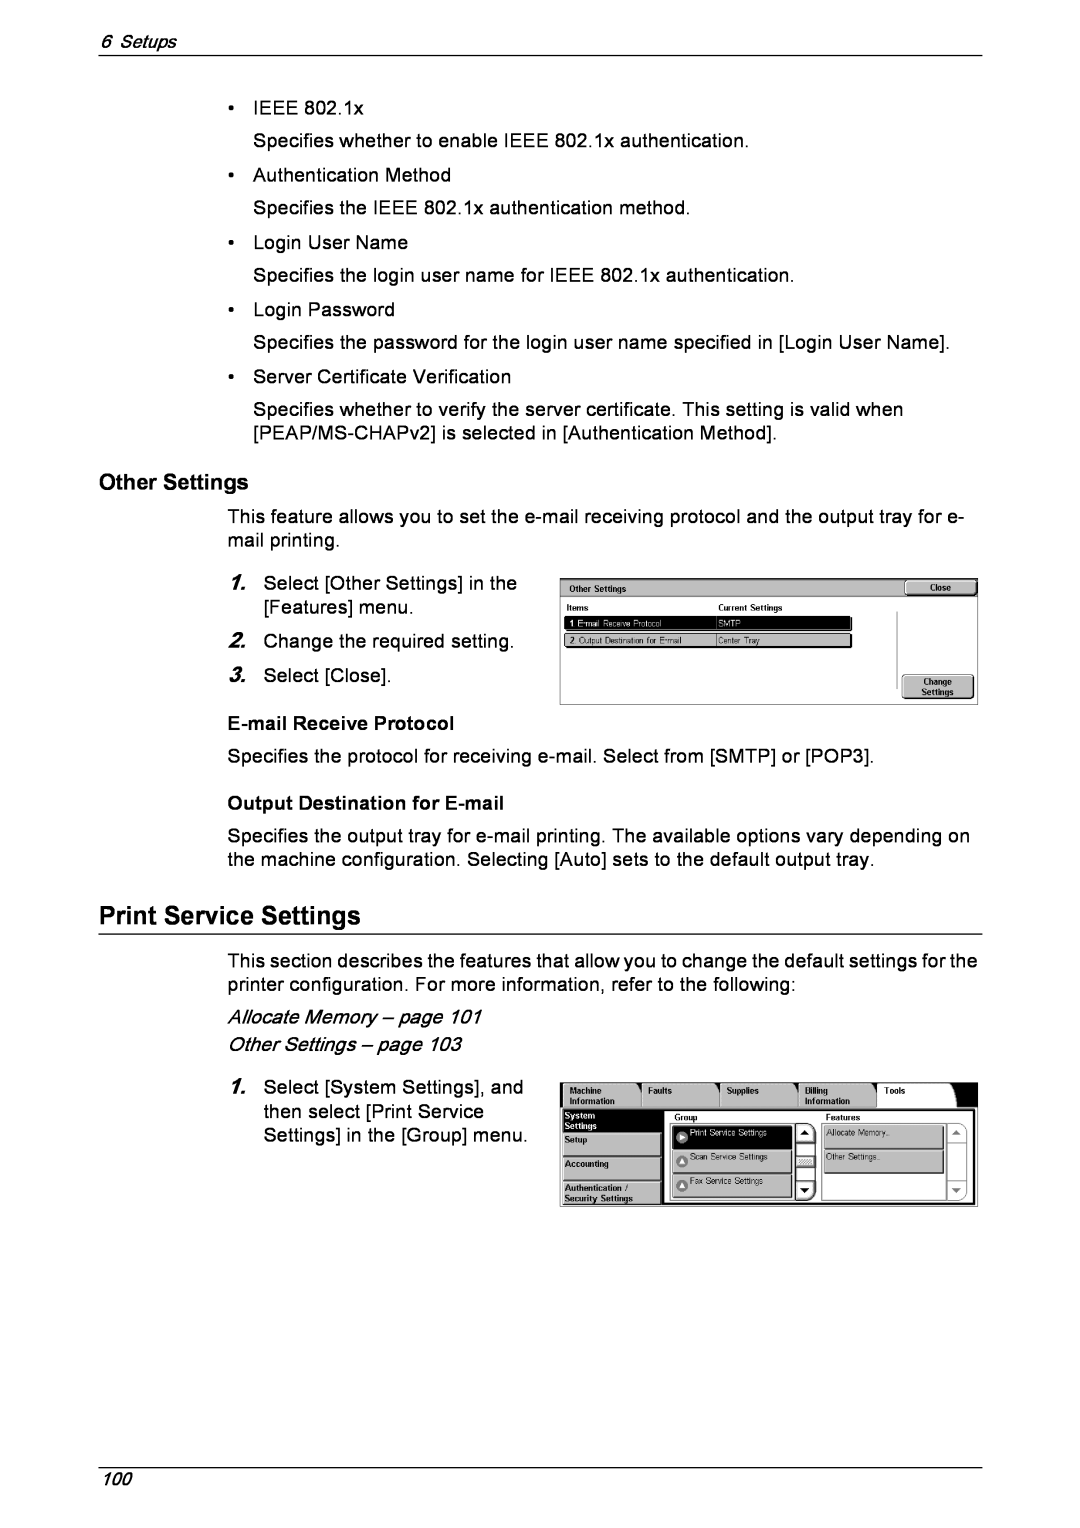 Xerox 5222 manual Print Service Settings, E-mailReceive Protocol, Output Destination for E-mail 